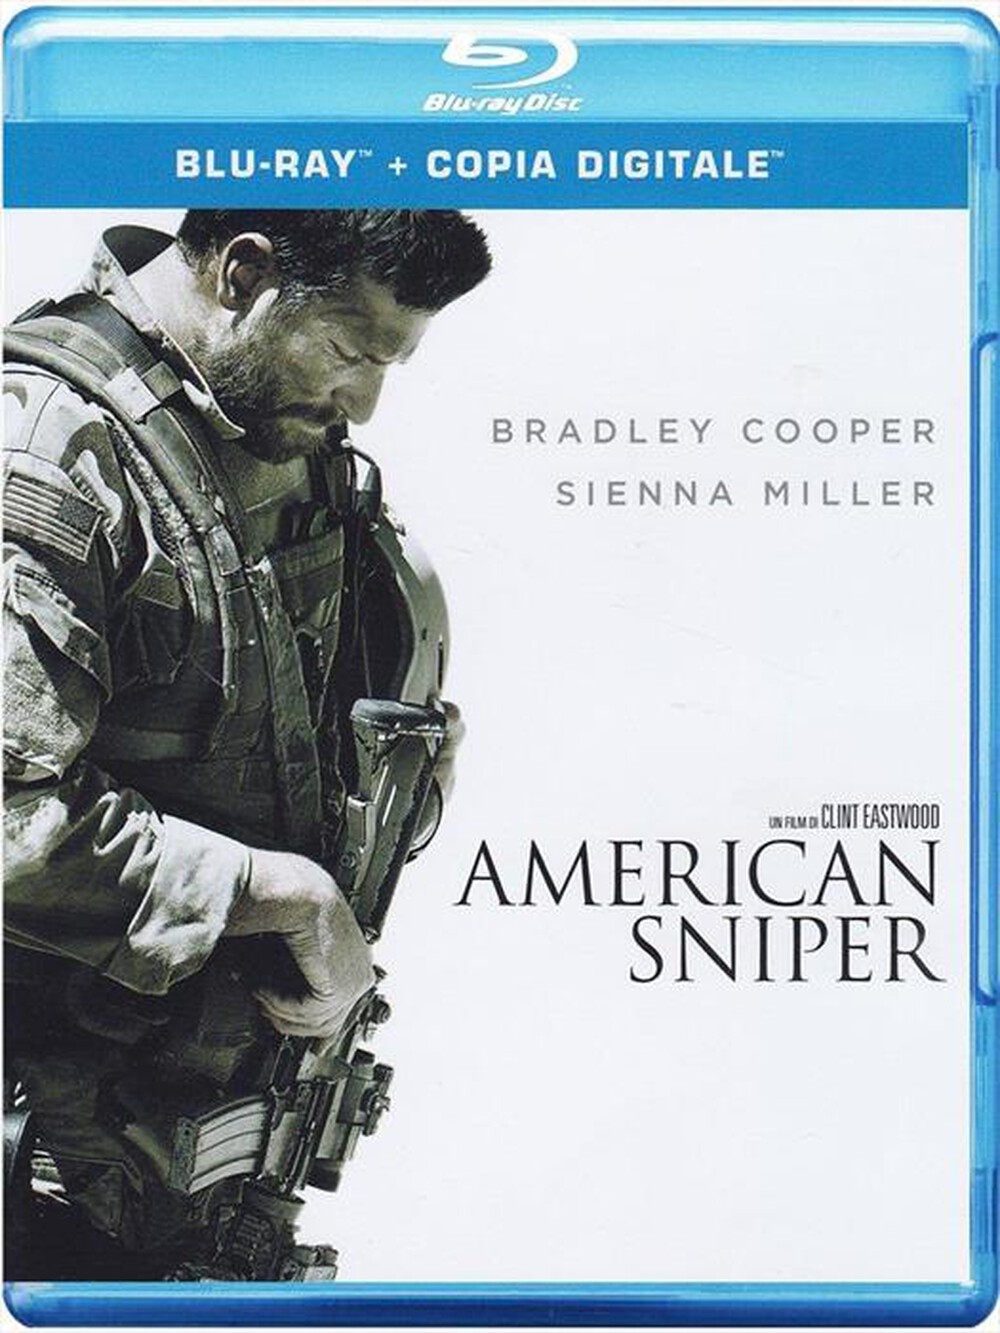 "WARNER HOME VIDEO - American Sniper"